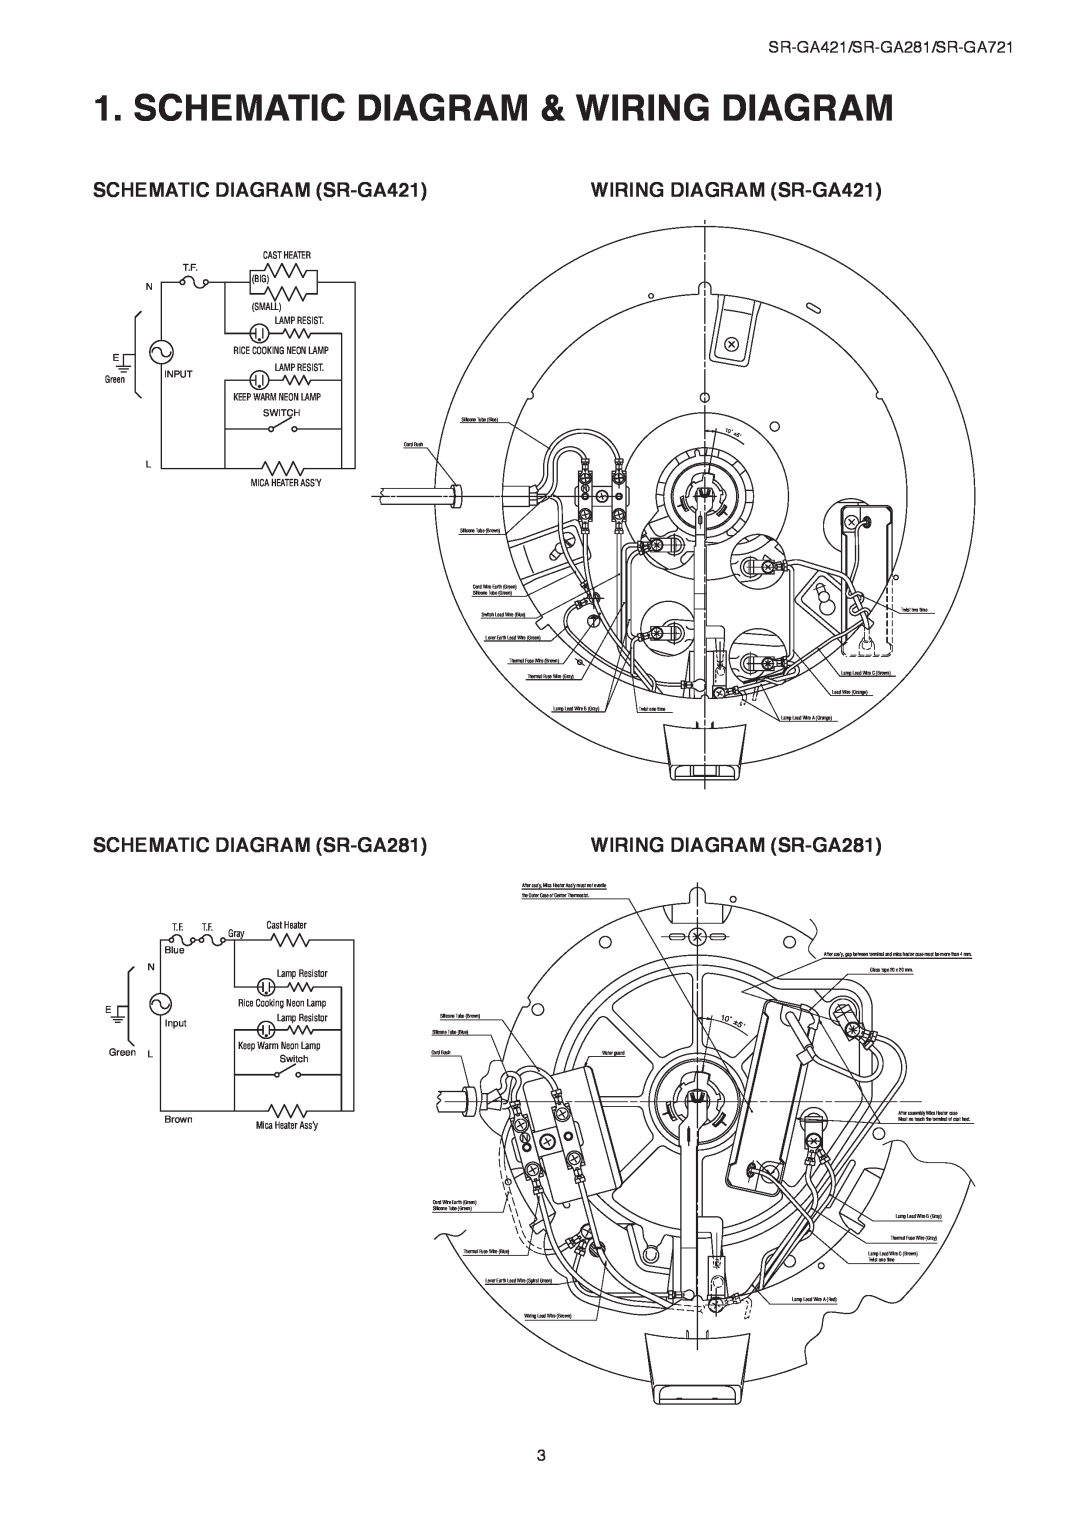 Panasonic SR-GA281 Schematic Diagram & Wiring Diagram, SCHEMATIC DIAGRAM SR-GA421, WIRING DIAGRAM SR-GA421 